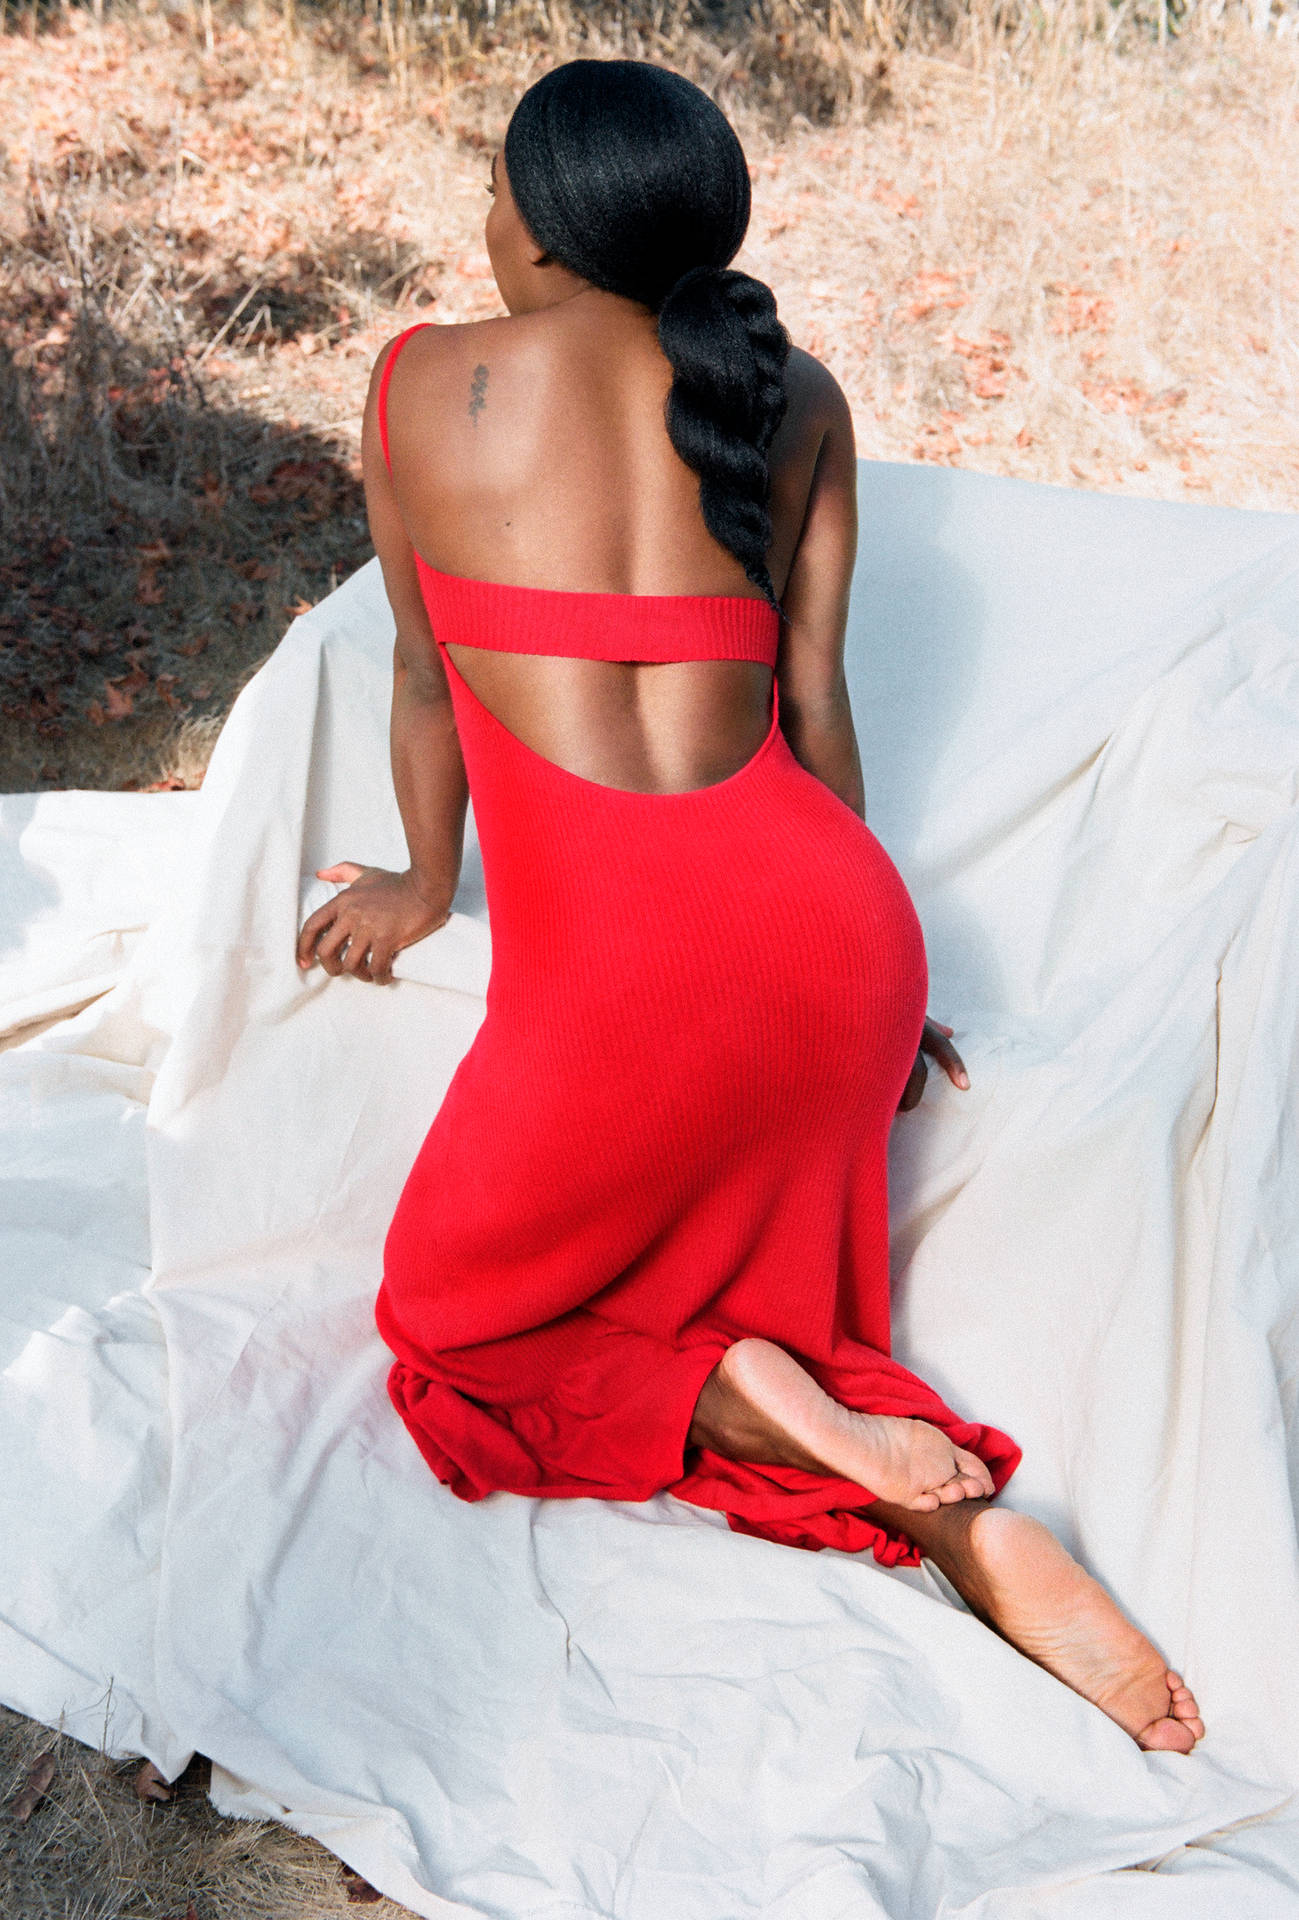 Sexy Back Serena Williams Background